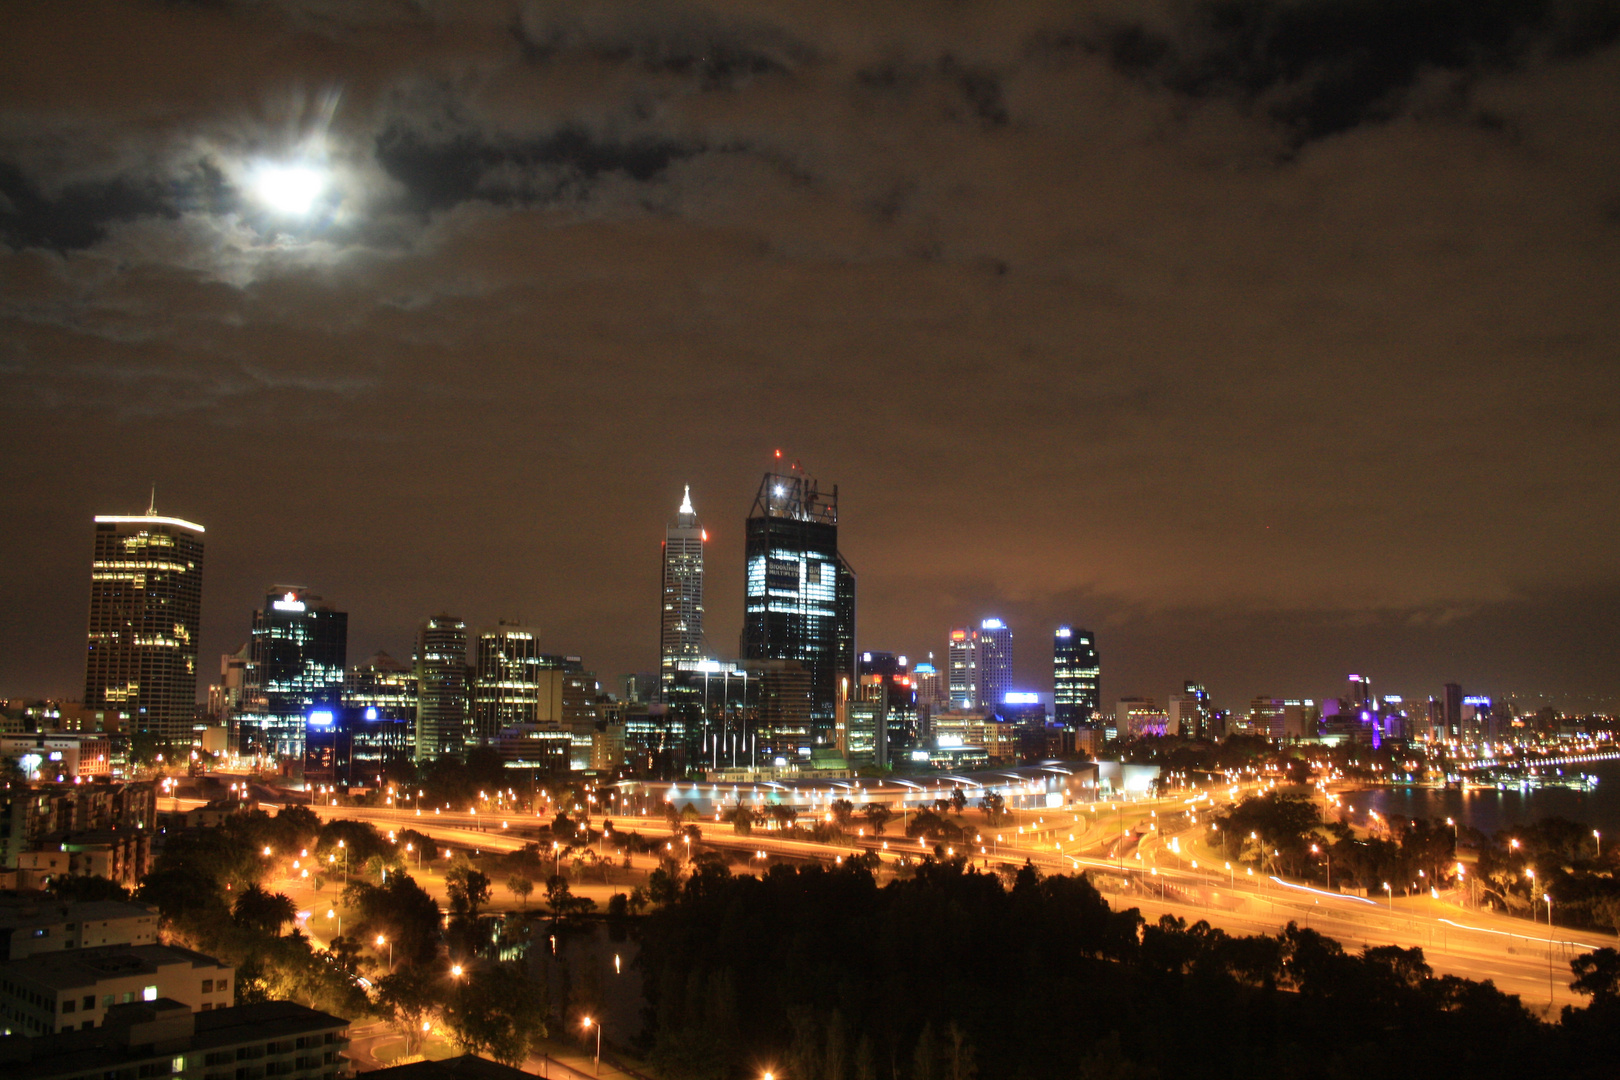 Perth by night